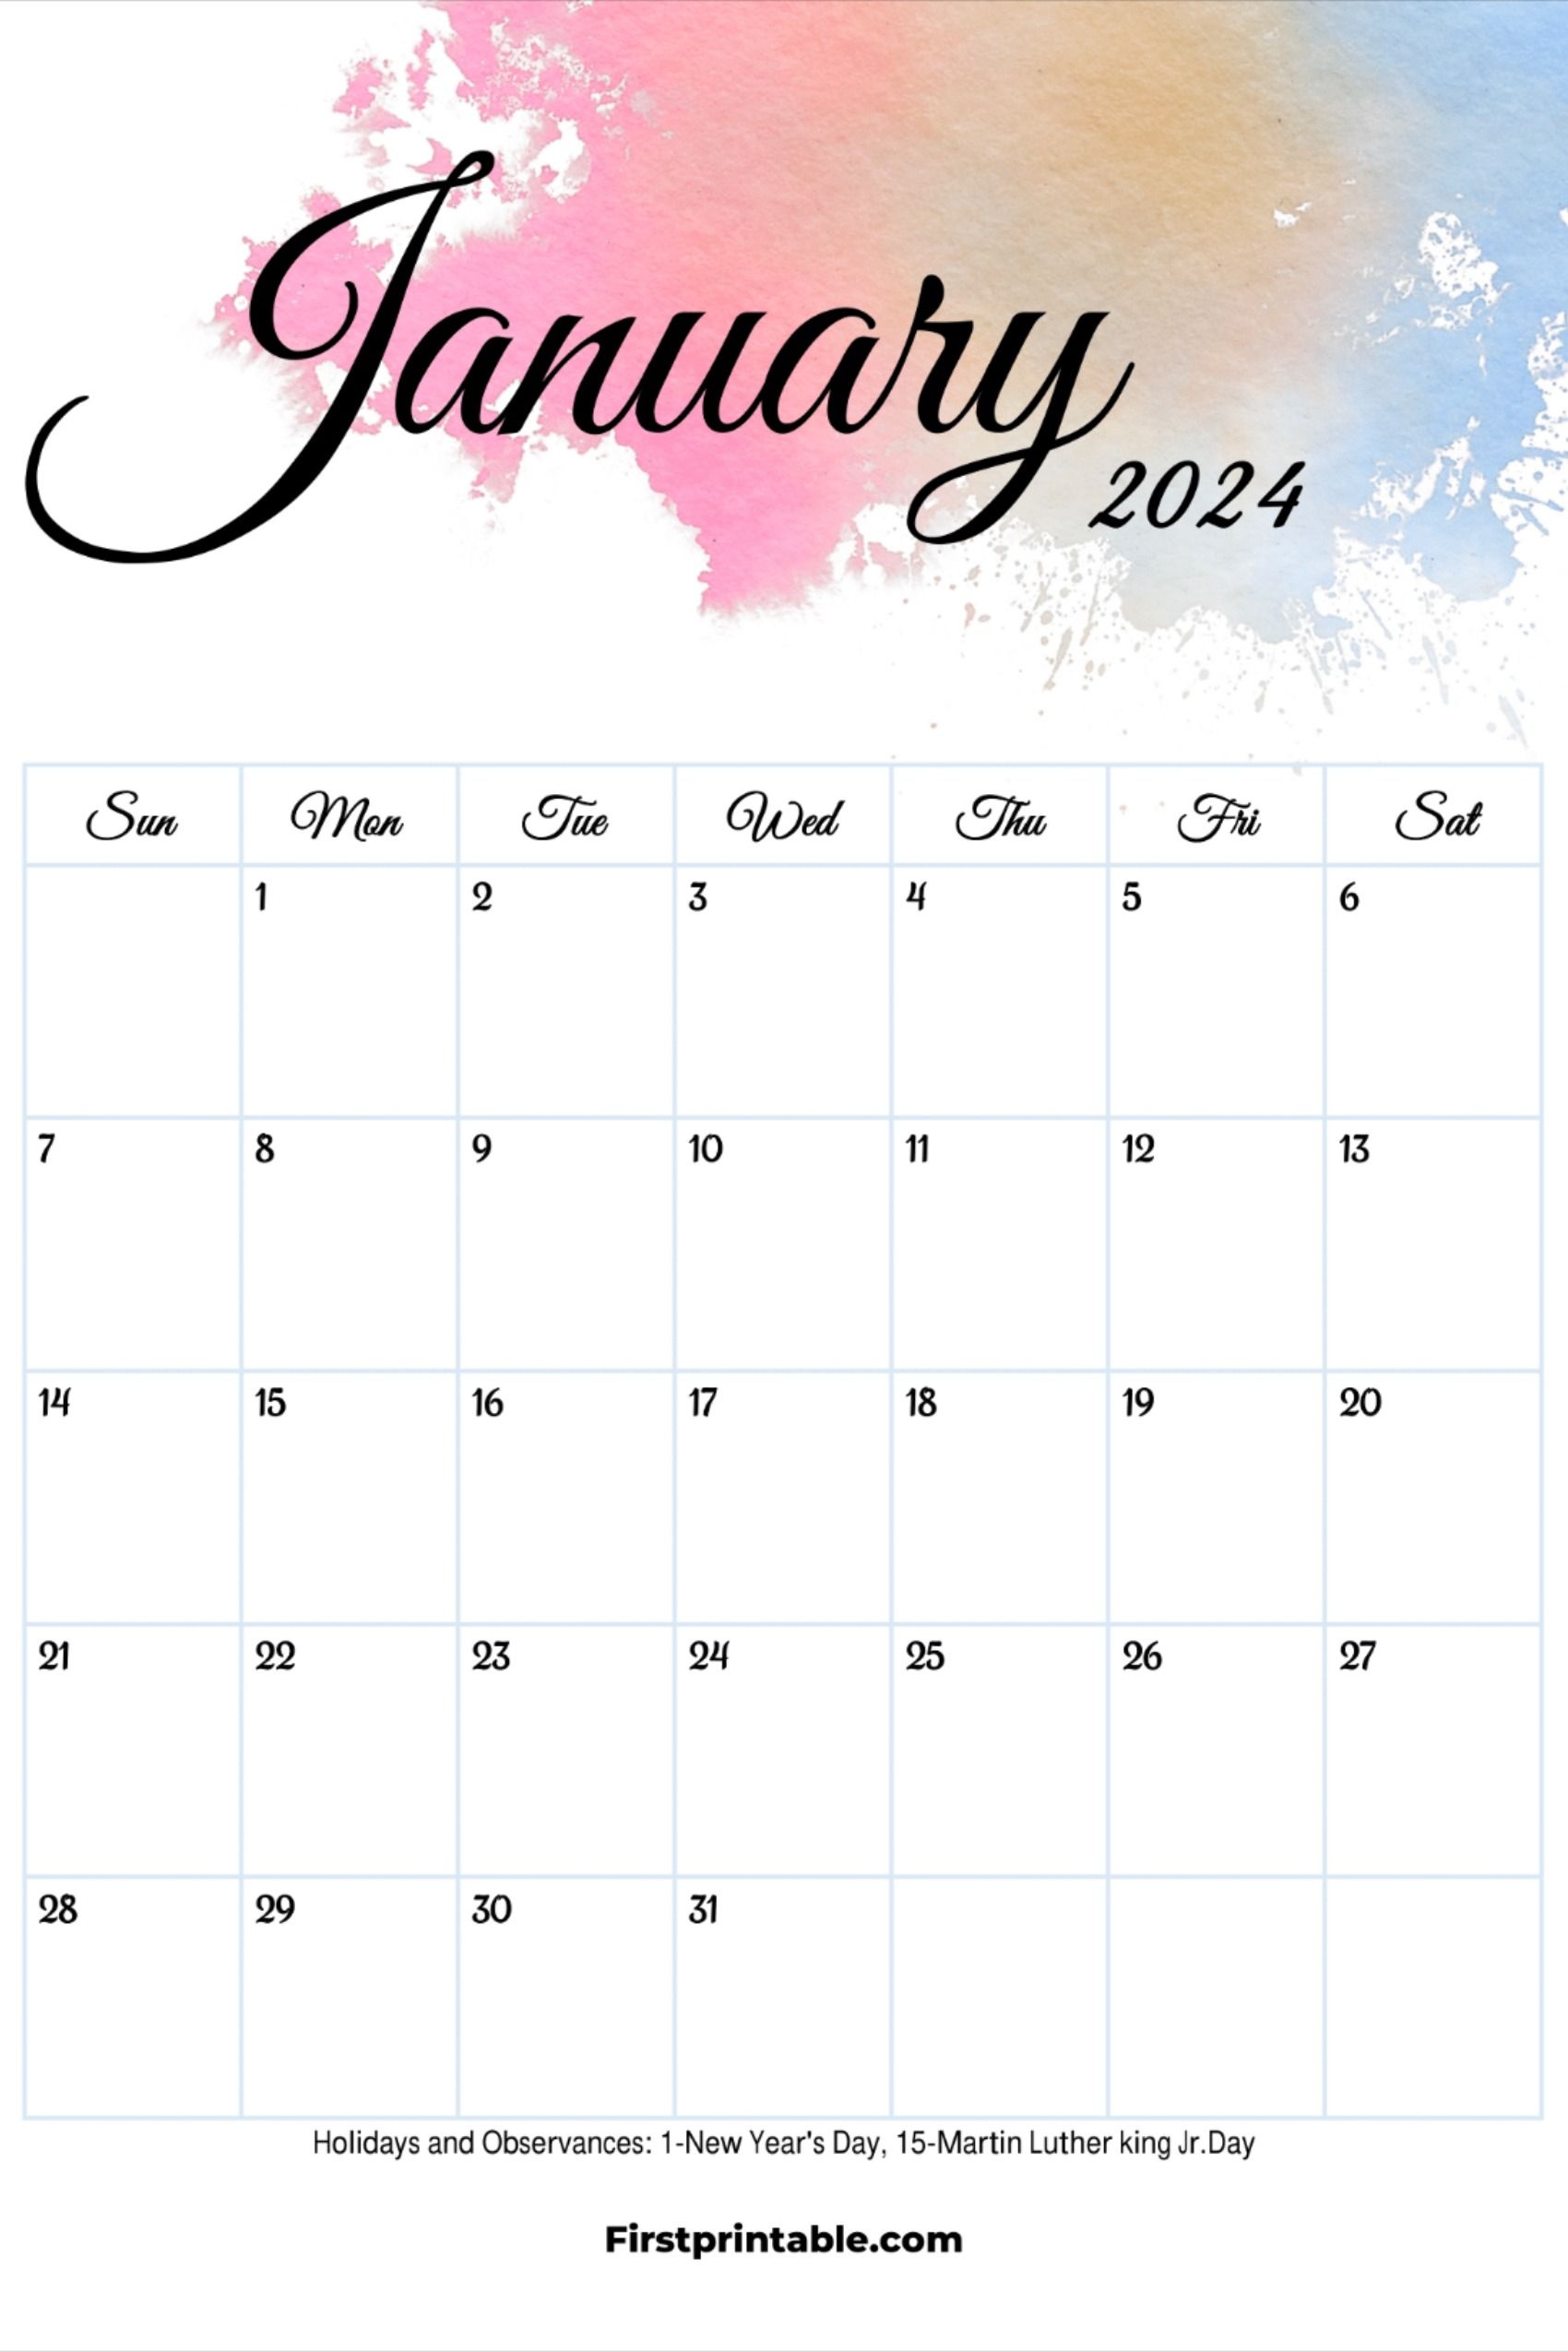 January 2024 Calendar With Holidays | Free Printable | Aesthetic with regard to Free Printable Calendar 2024 Aesthetic